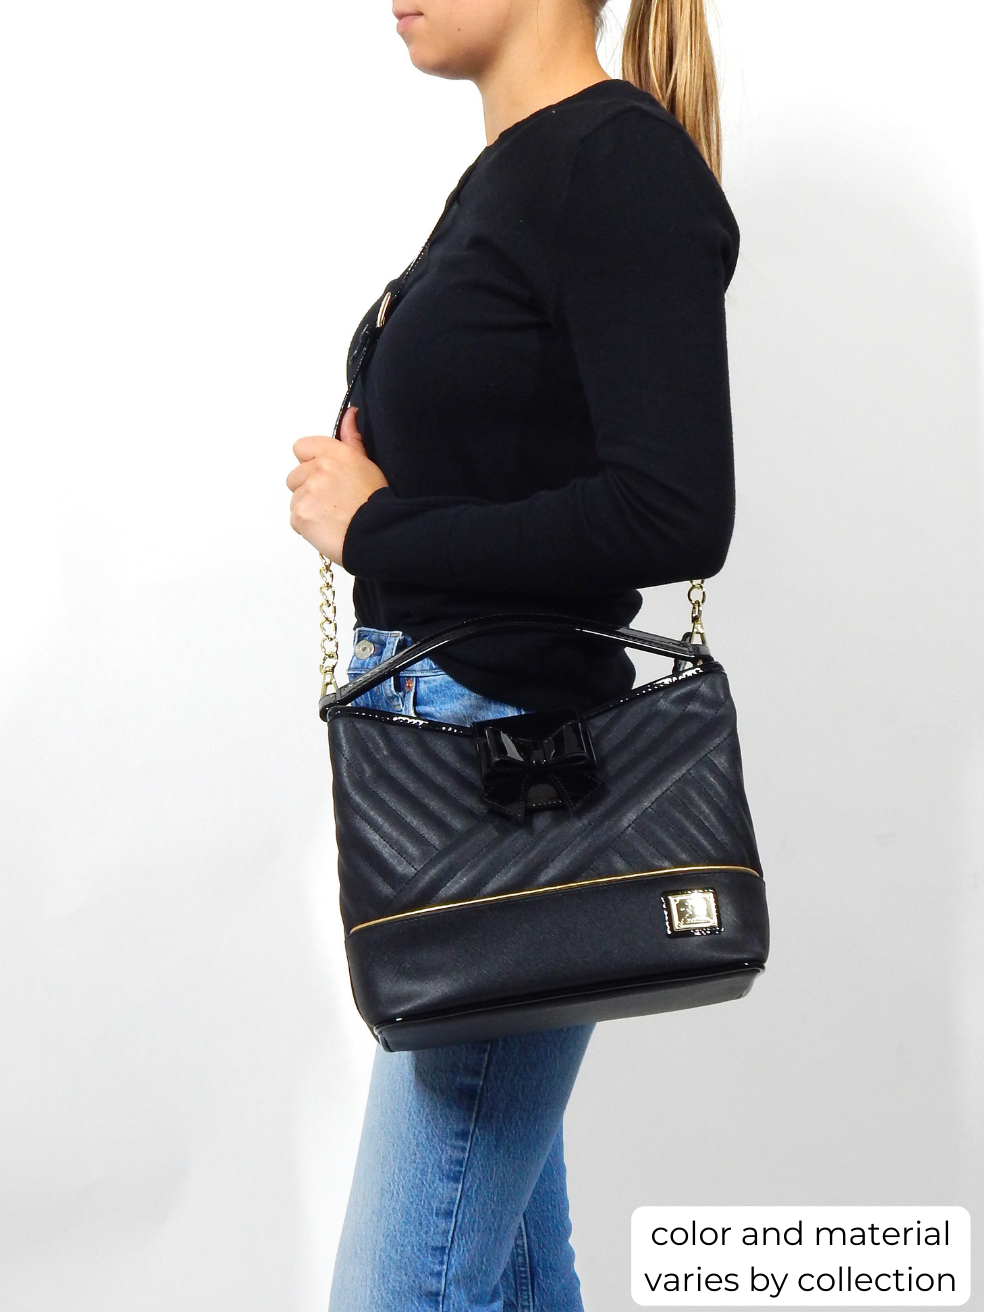 Cavalinho Ciao Bella Handbag SKU 18060272 #color_saddlebrown multi-color, black